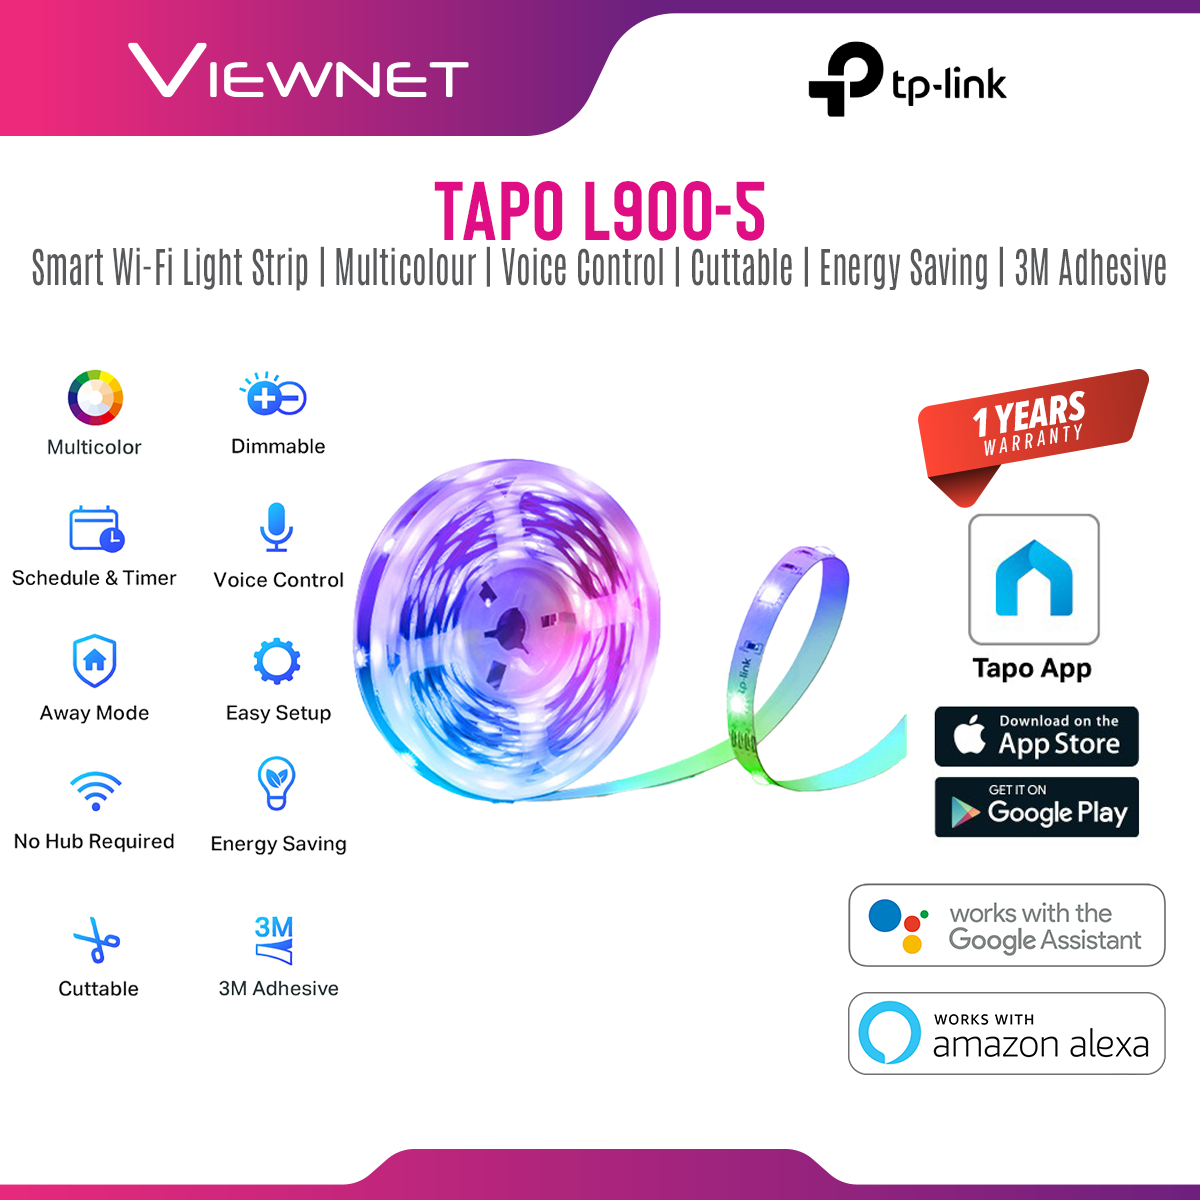 TP-LINK Tapo L900-5 Smart Wi-Fi Light Strip